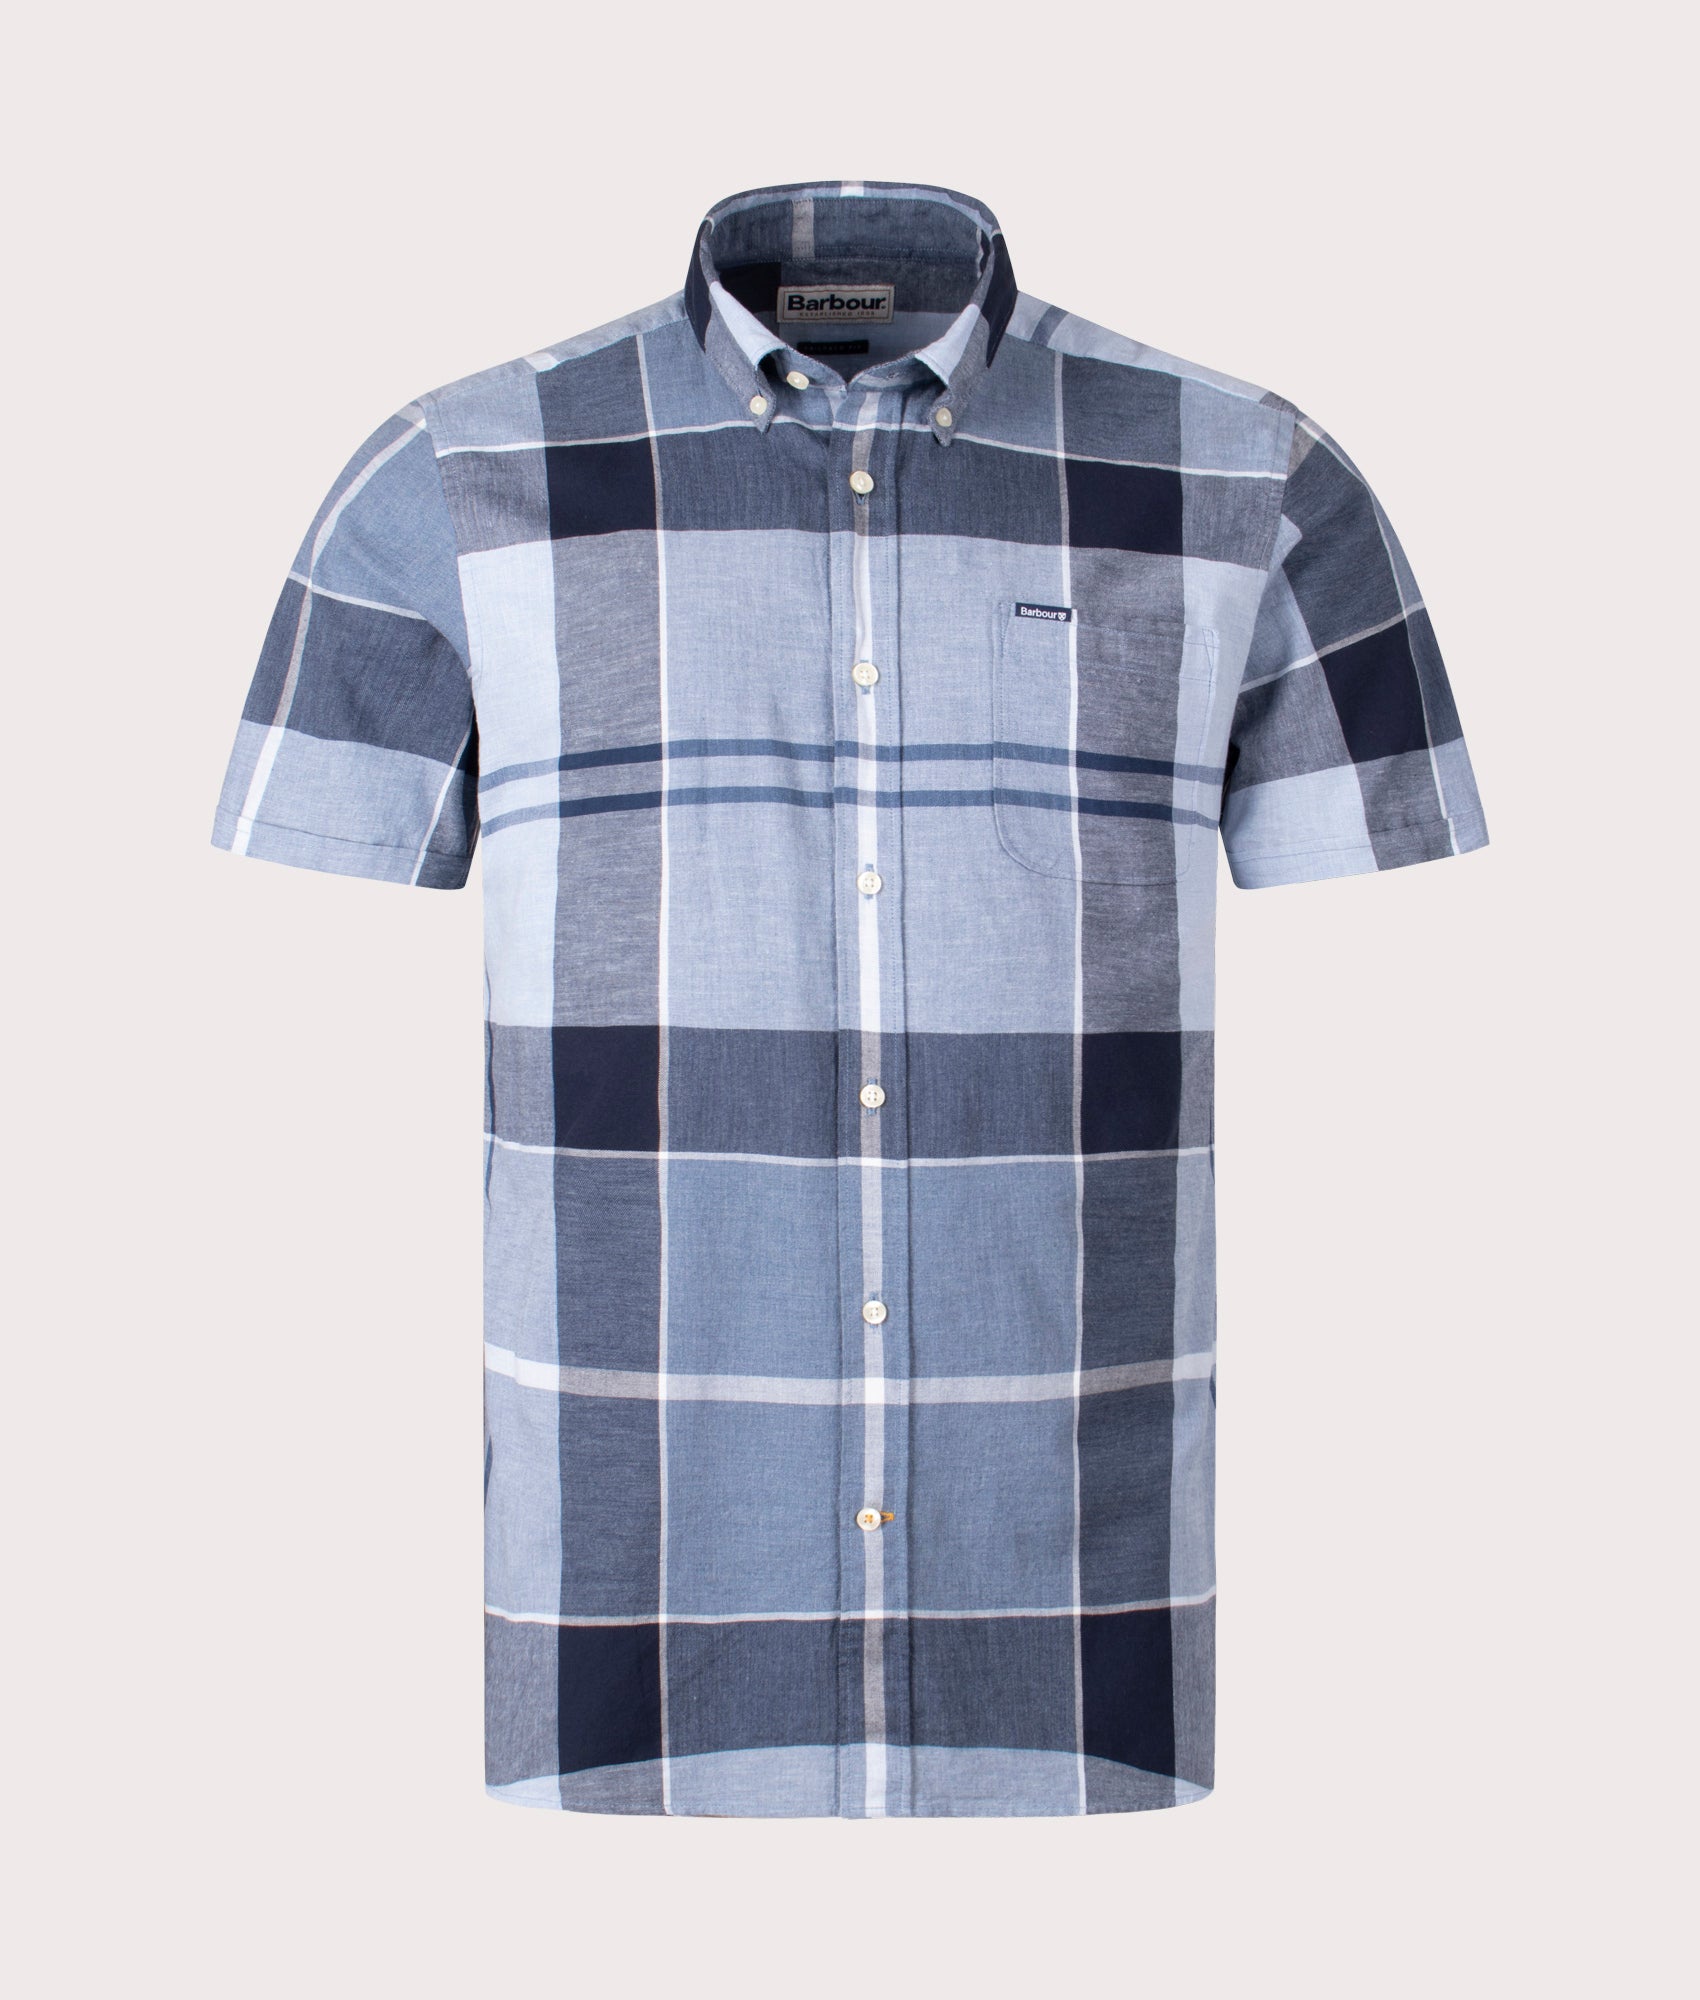 Barbour Lifestyle Mens Short Sleeve Doughill Shirt - Colour: TN22 Berwick Blue - Size: Large